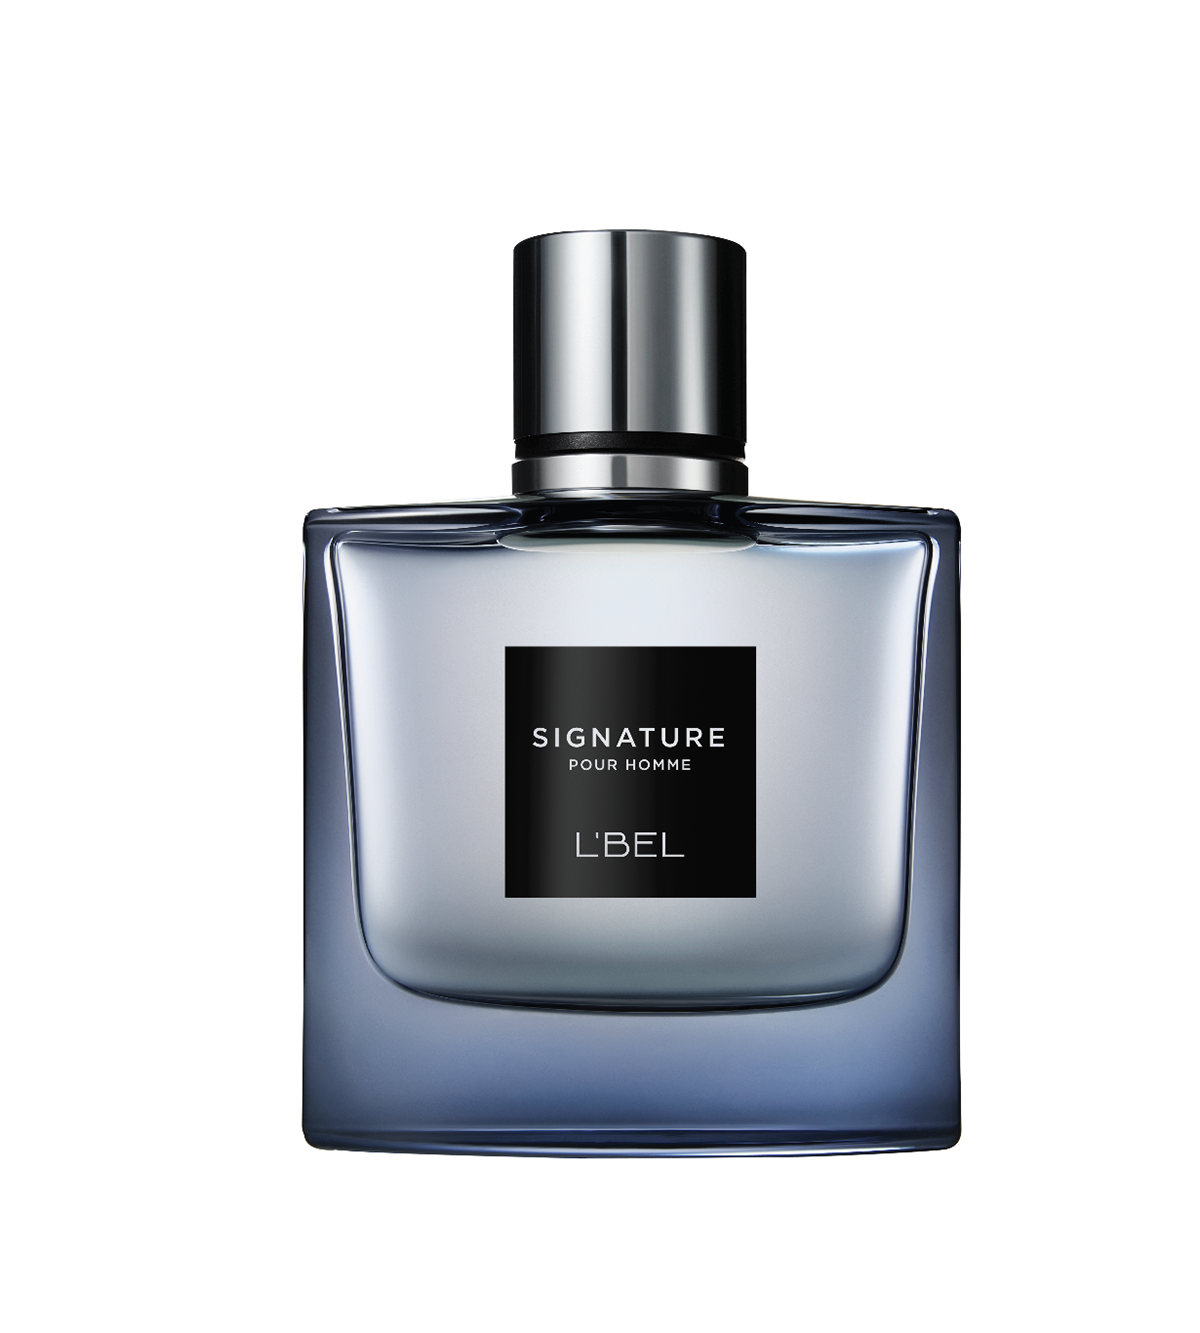 beautypackaging Fragrance fragrancedesign L'BEL luxurydesign menfragrance Packaging productdesign